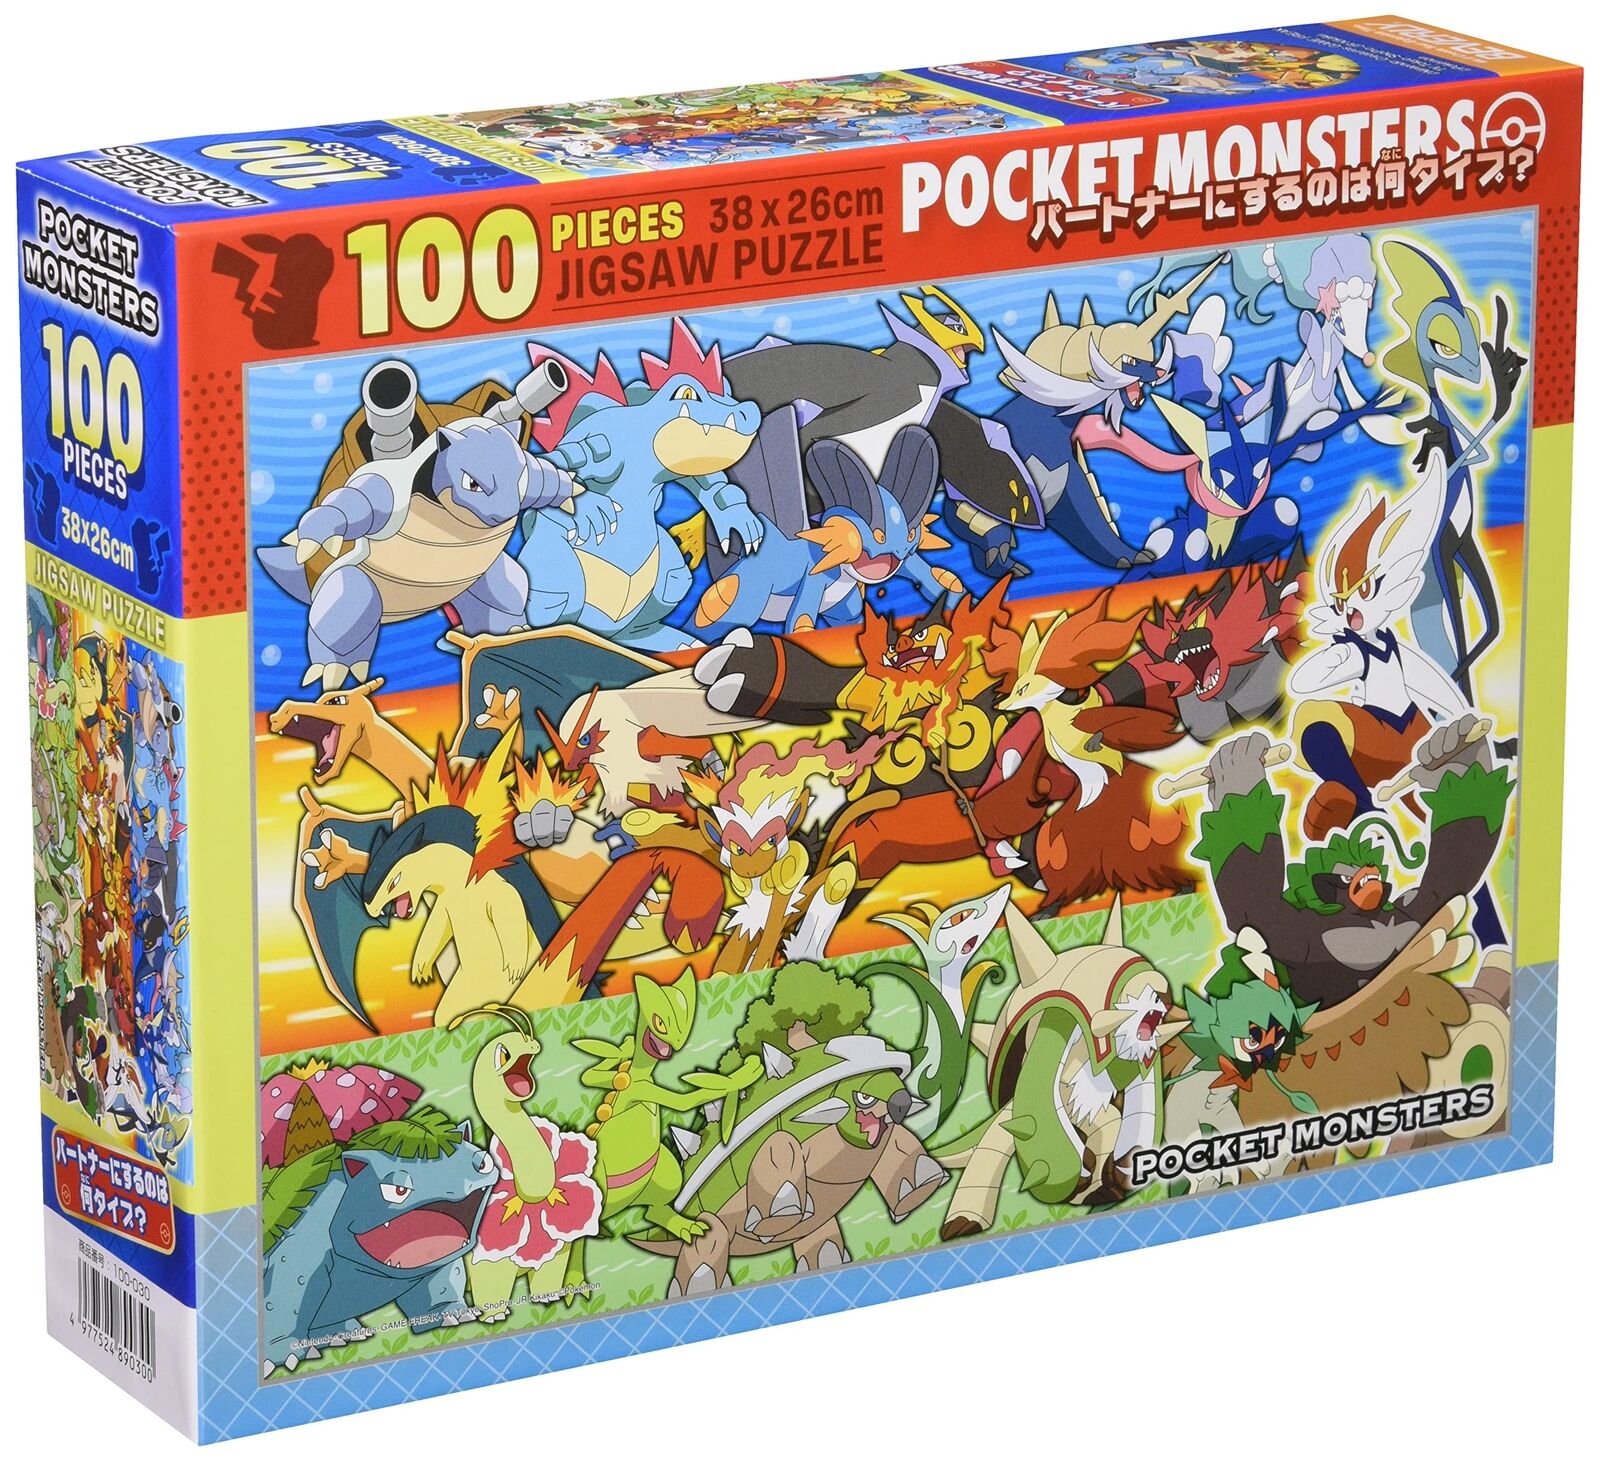 Beverly Jigsaw Puzzle Pokemon 100 Piece Japan Pocket Monsters 100-030 38x26cm